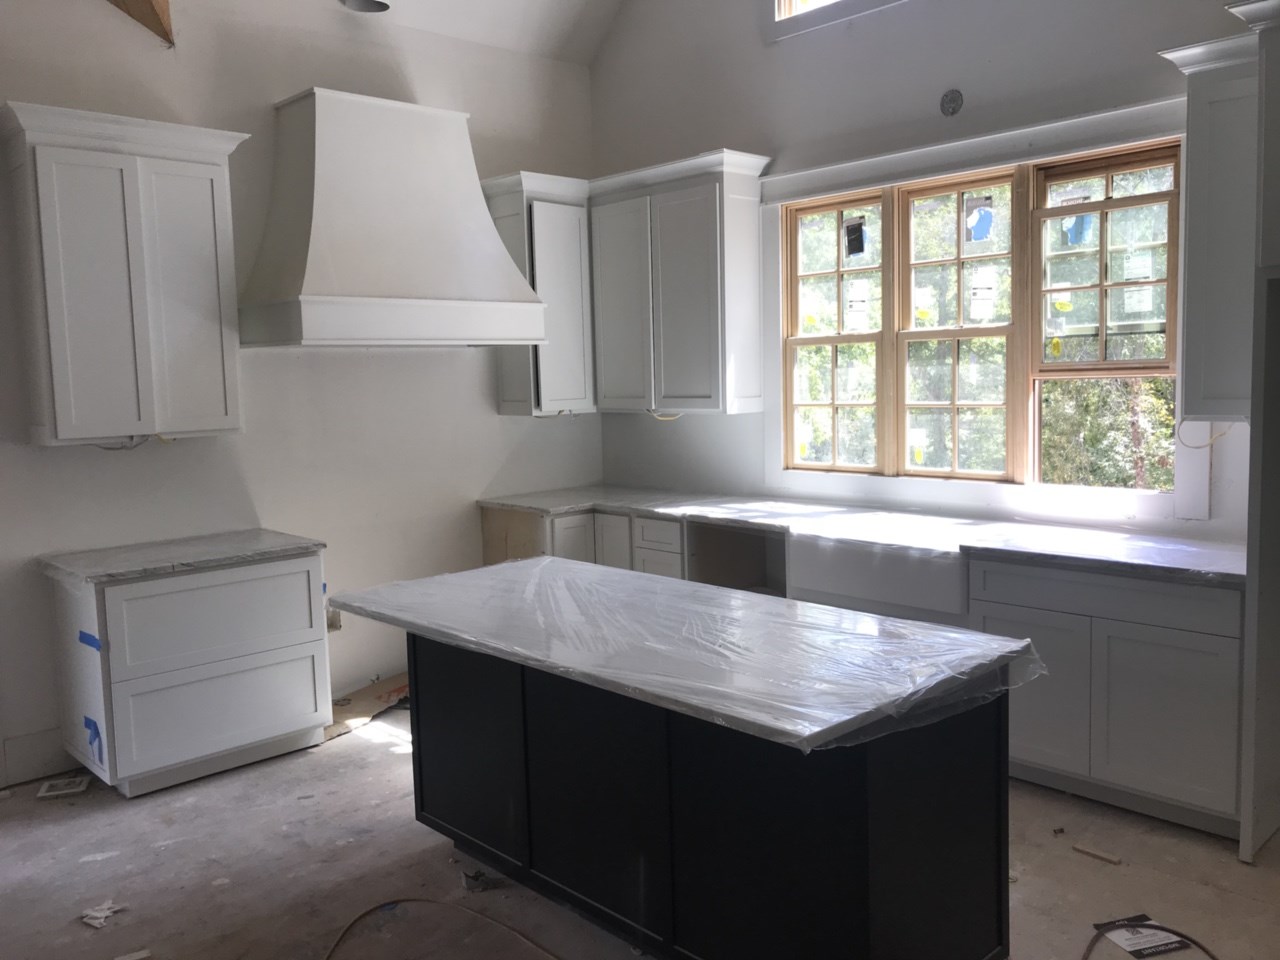 2-kitchen cabinets and granite